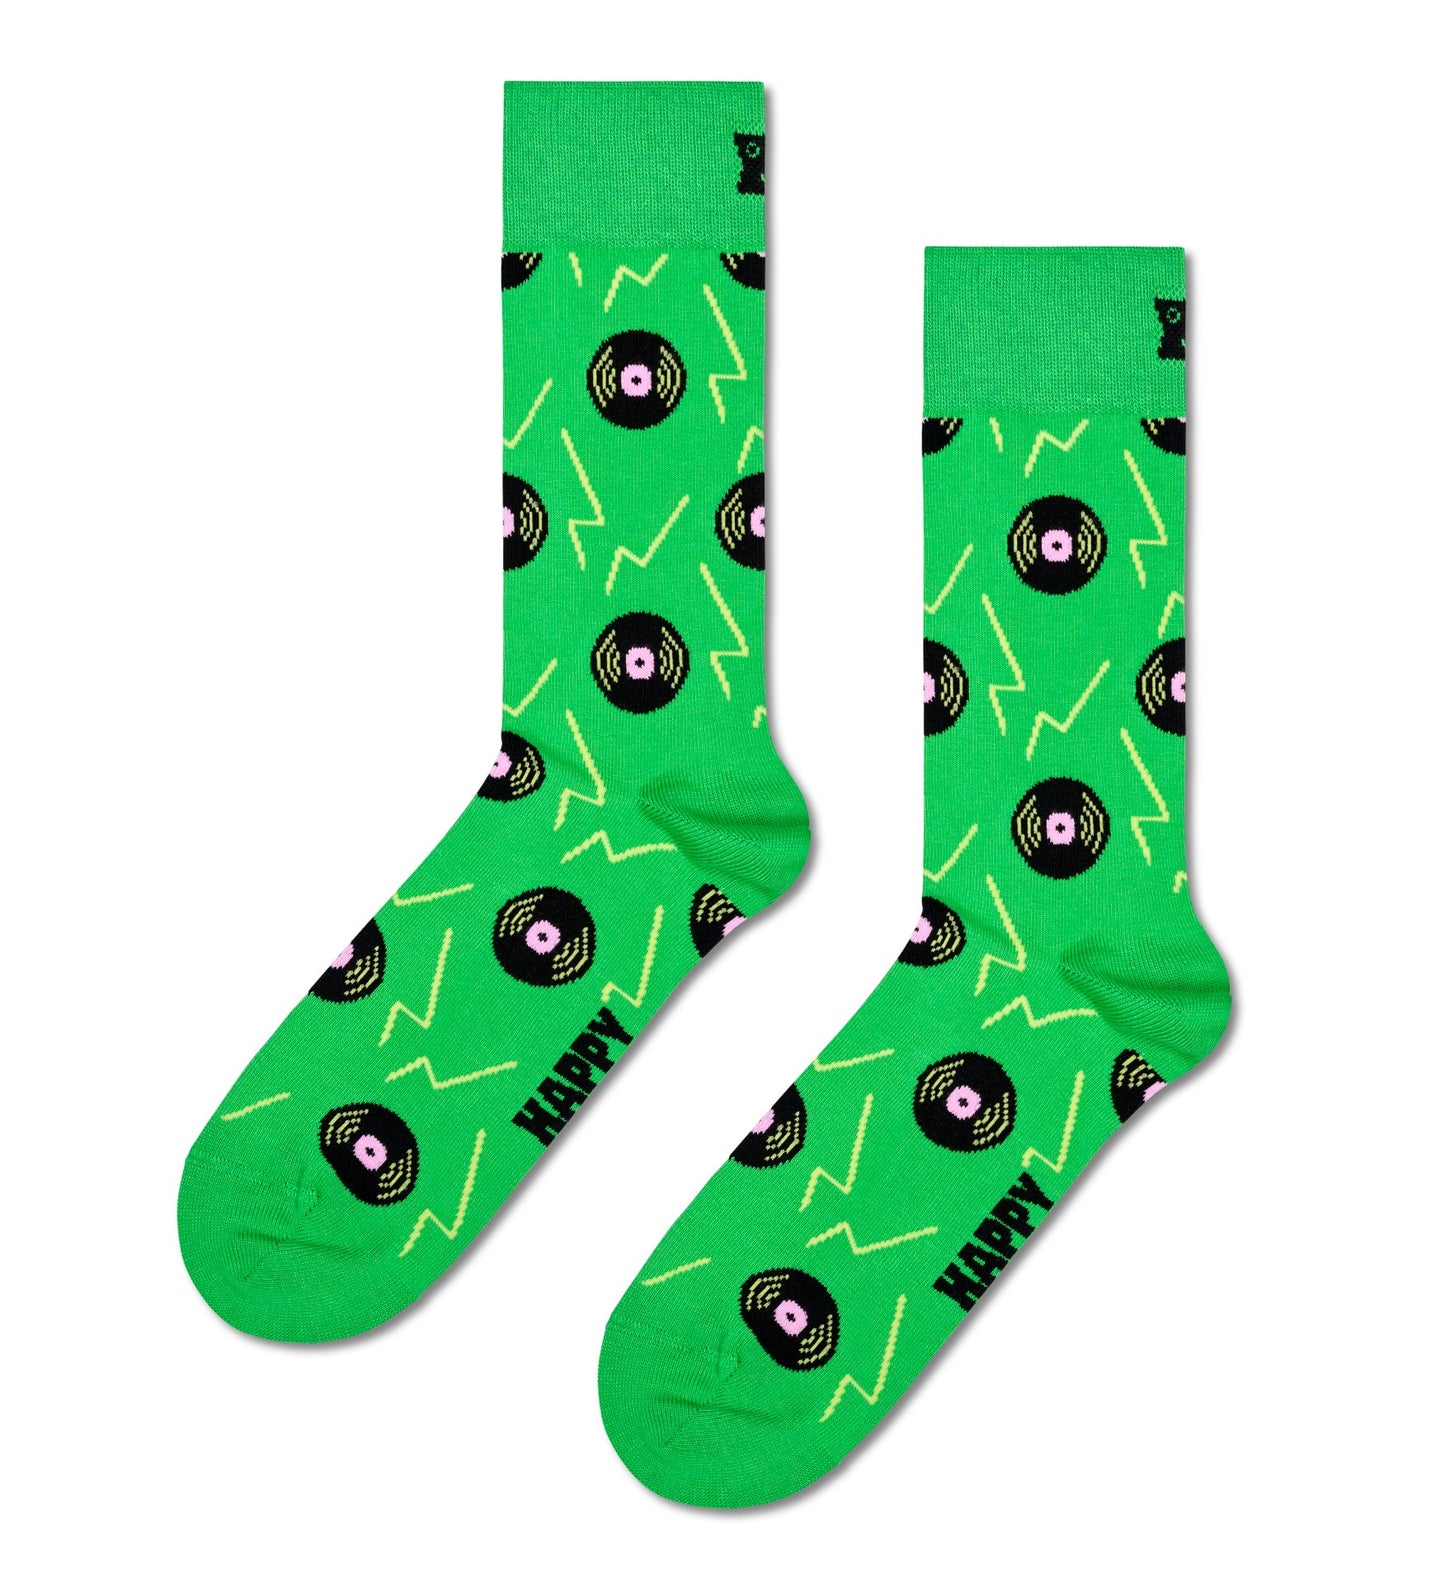 Vinyl Green Socks